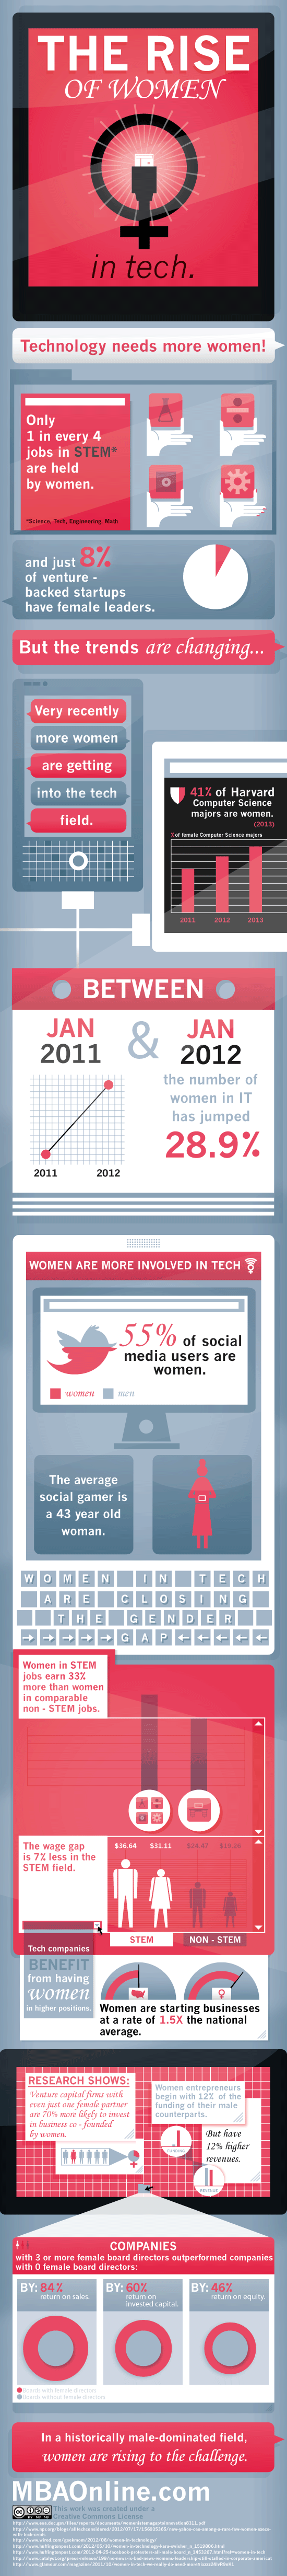 The Rise Of Women In Tech